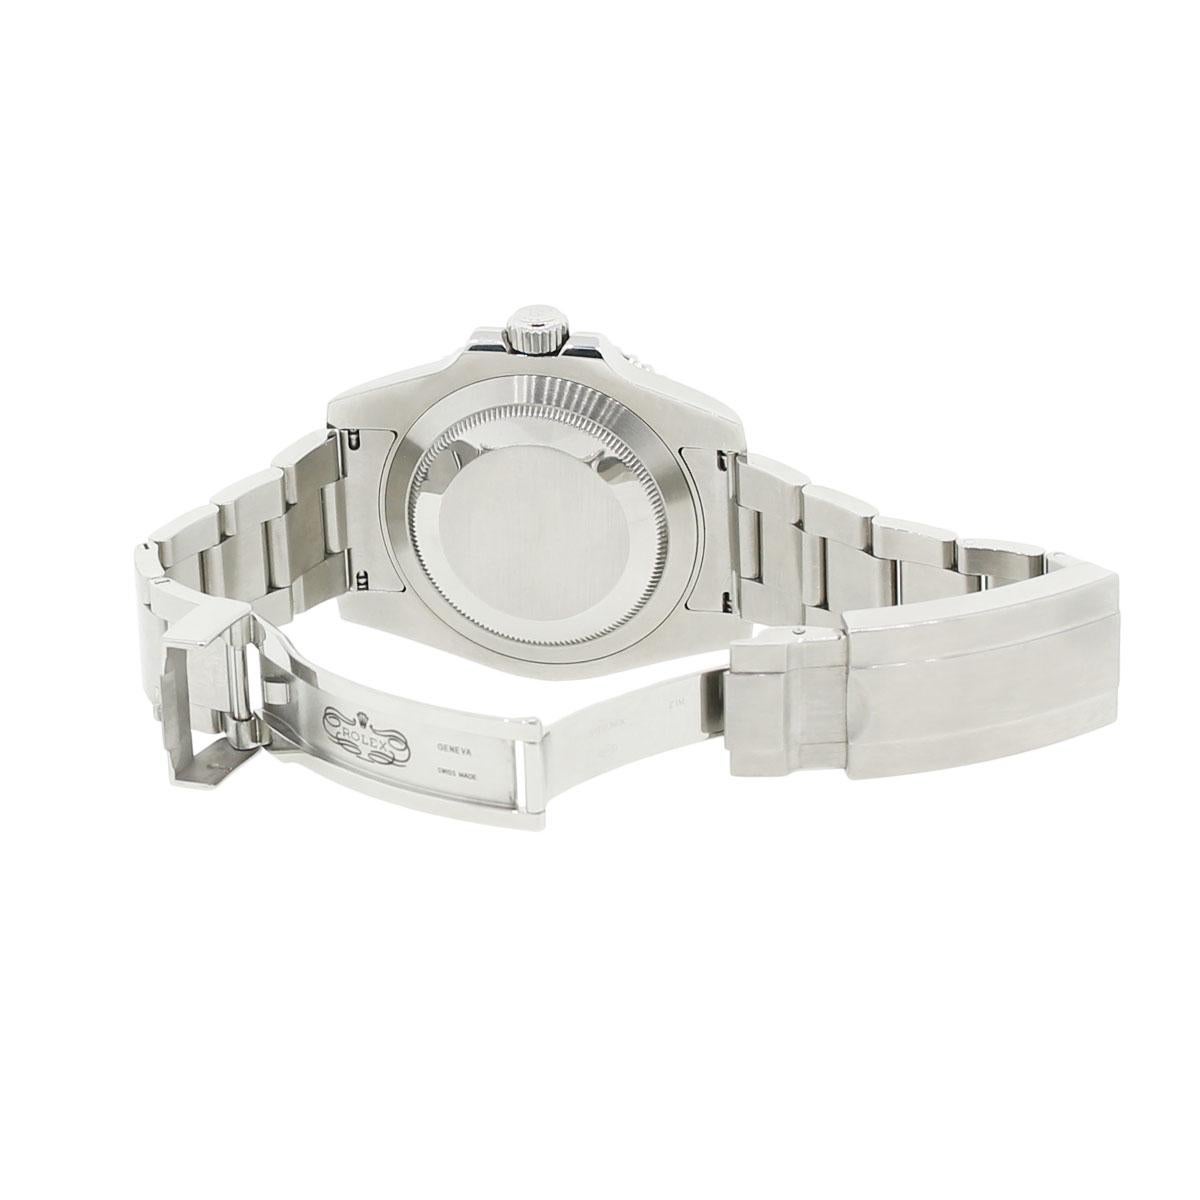 Women's or Men's Rolex Stainless Steel Ceramic Submariner Automatic Wristwatch, Ref 116610